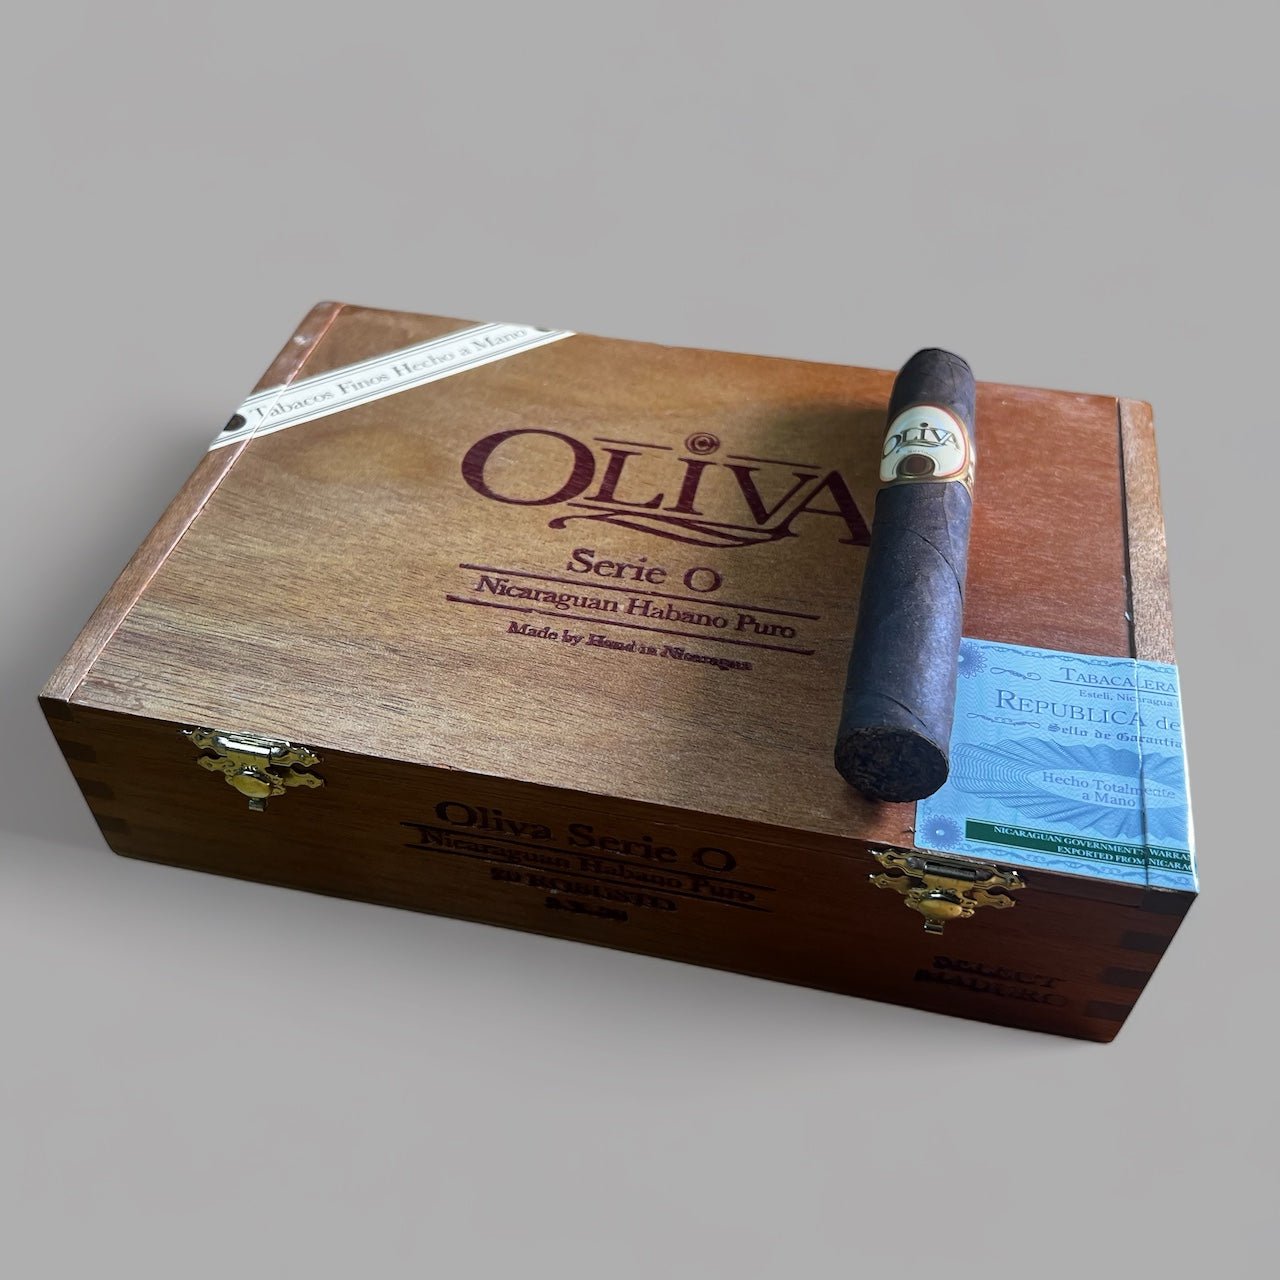 Oliva Serie O Maduro Robusto - Cigar 30